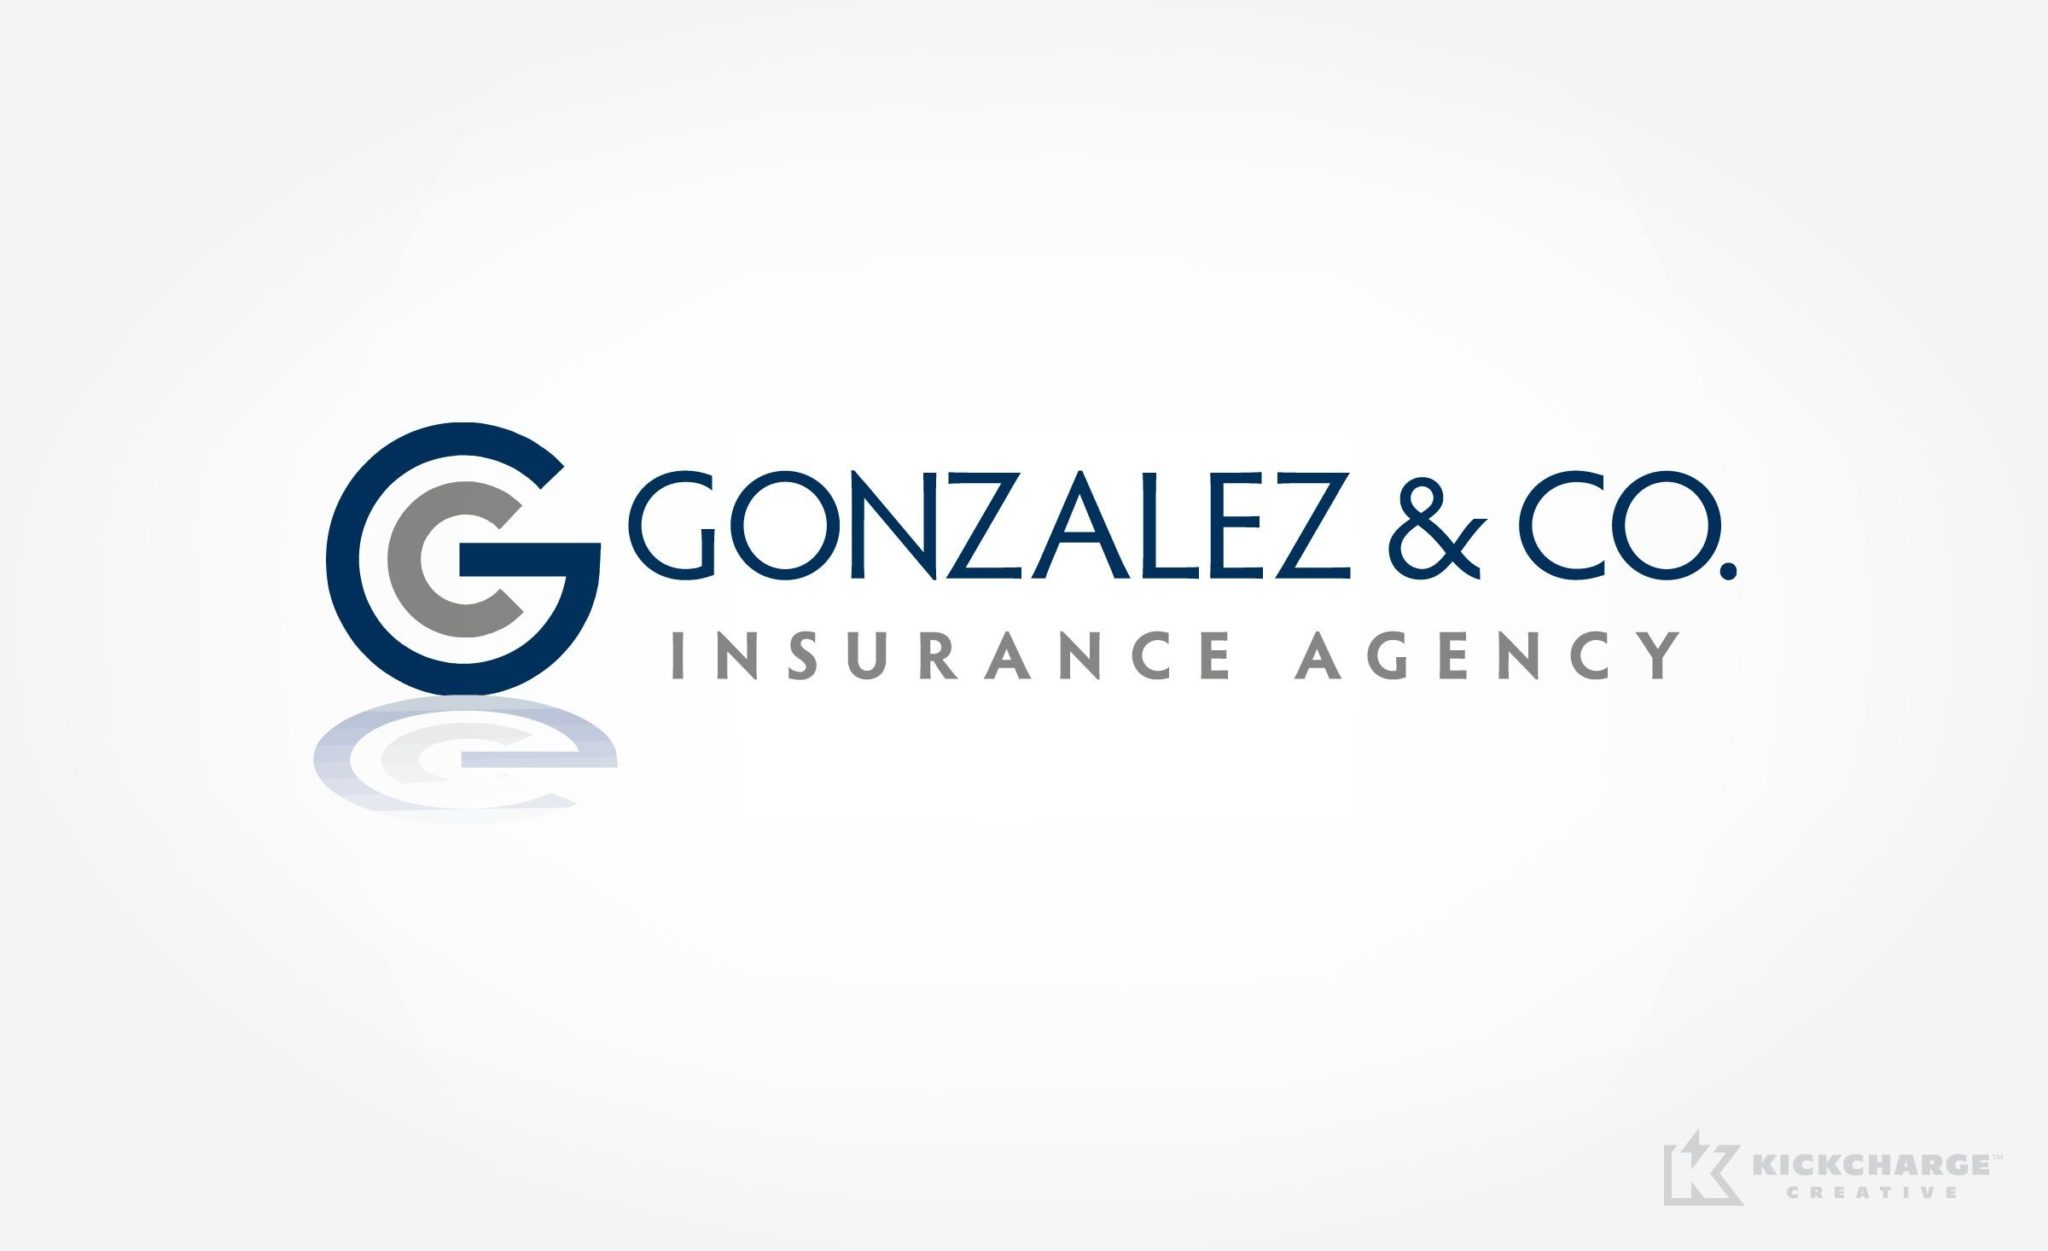 Gonzalez Insurance